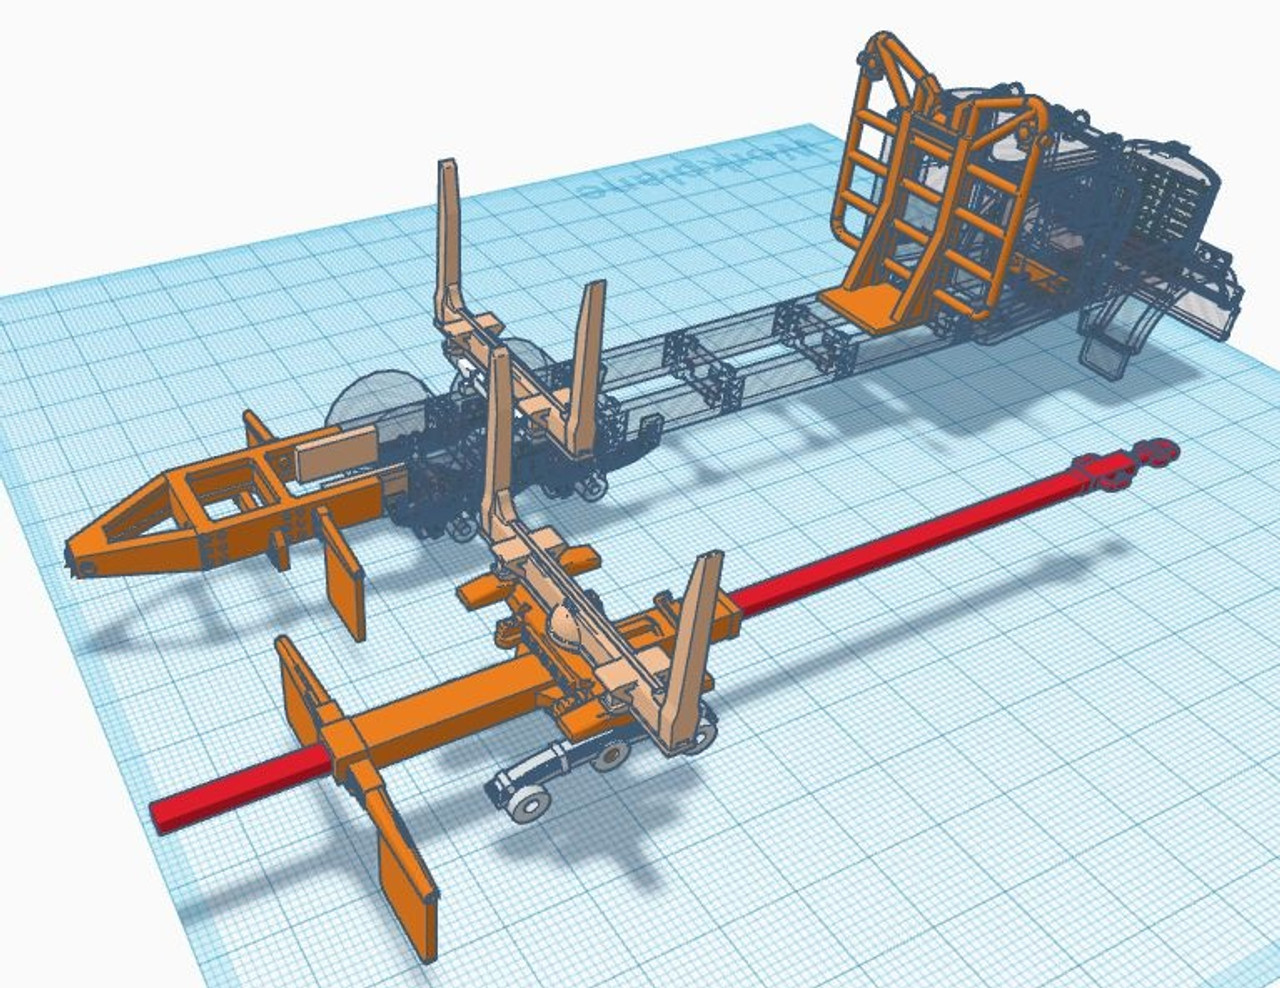 1:64 Scale Western Style Logging Gear 3D Printed Model Kit